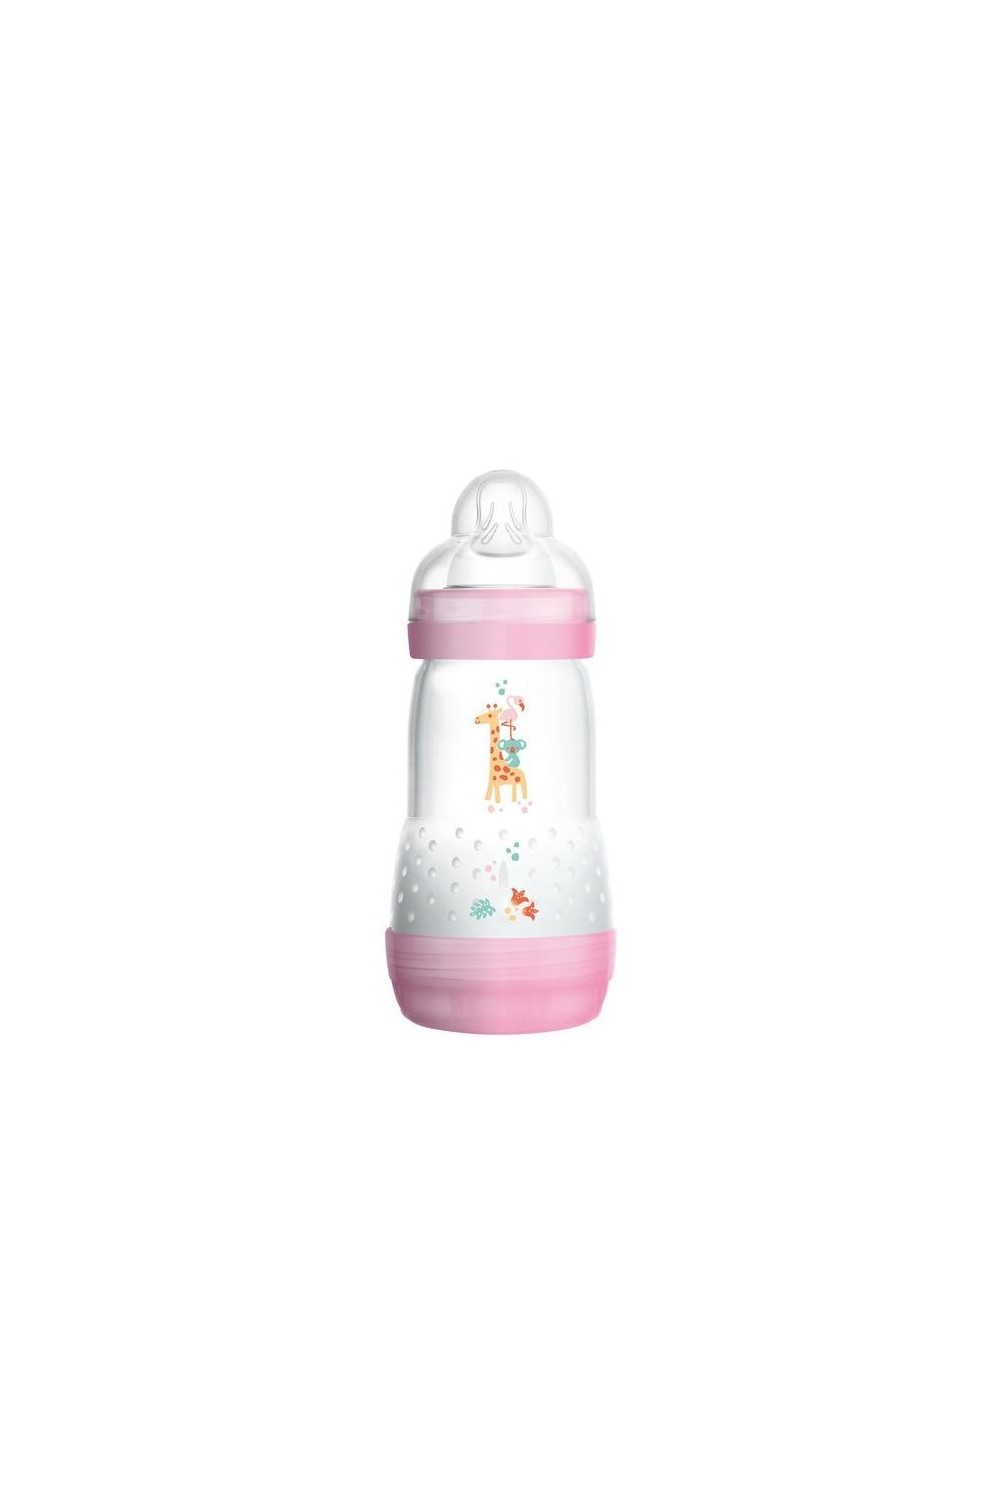 Mam Baby Anti Colic Bottle Pink 260ml